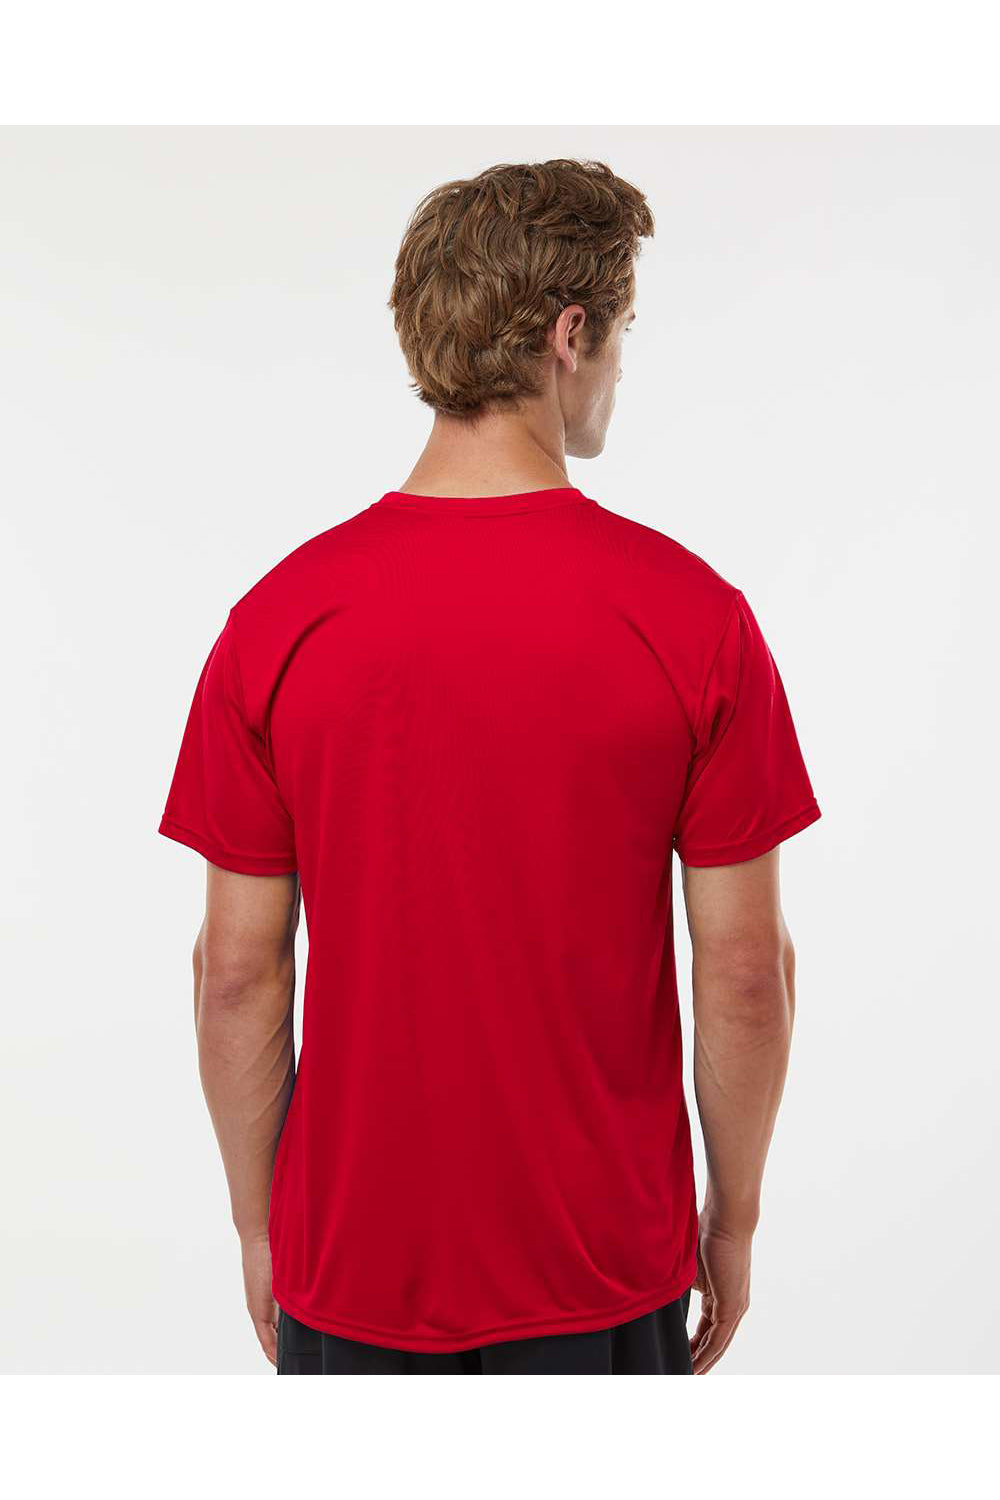 Holloway 222818 Mens Momentum Short Sleeve Crewneck T-Shirt Scarlet Red Model Back